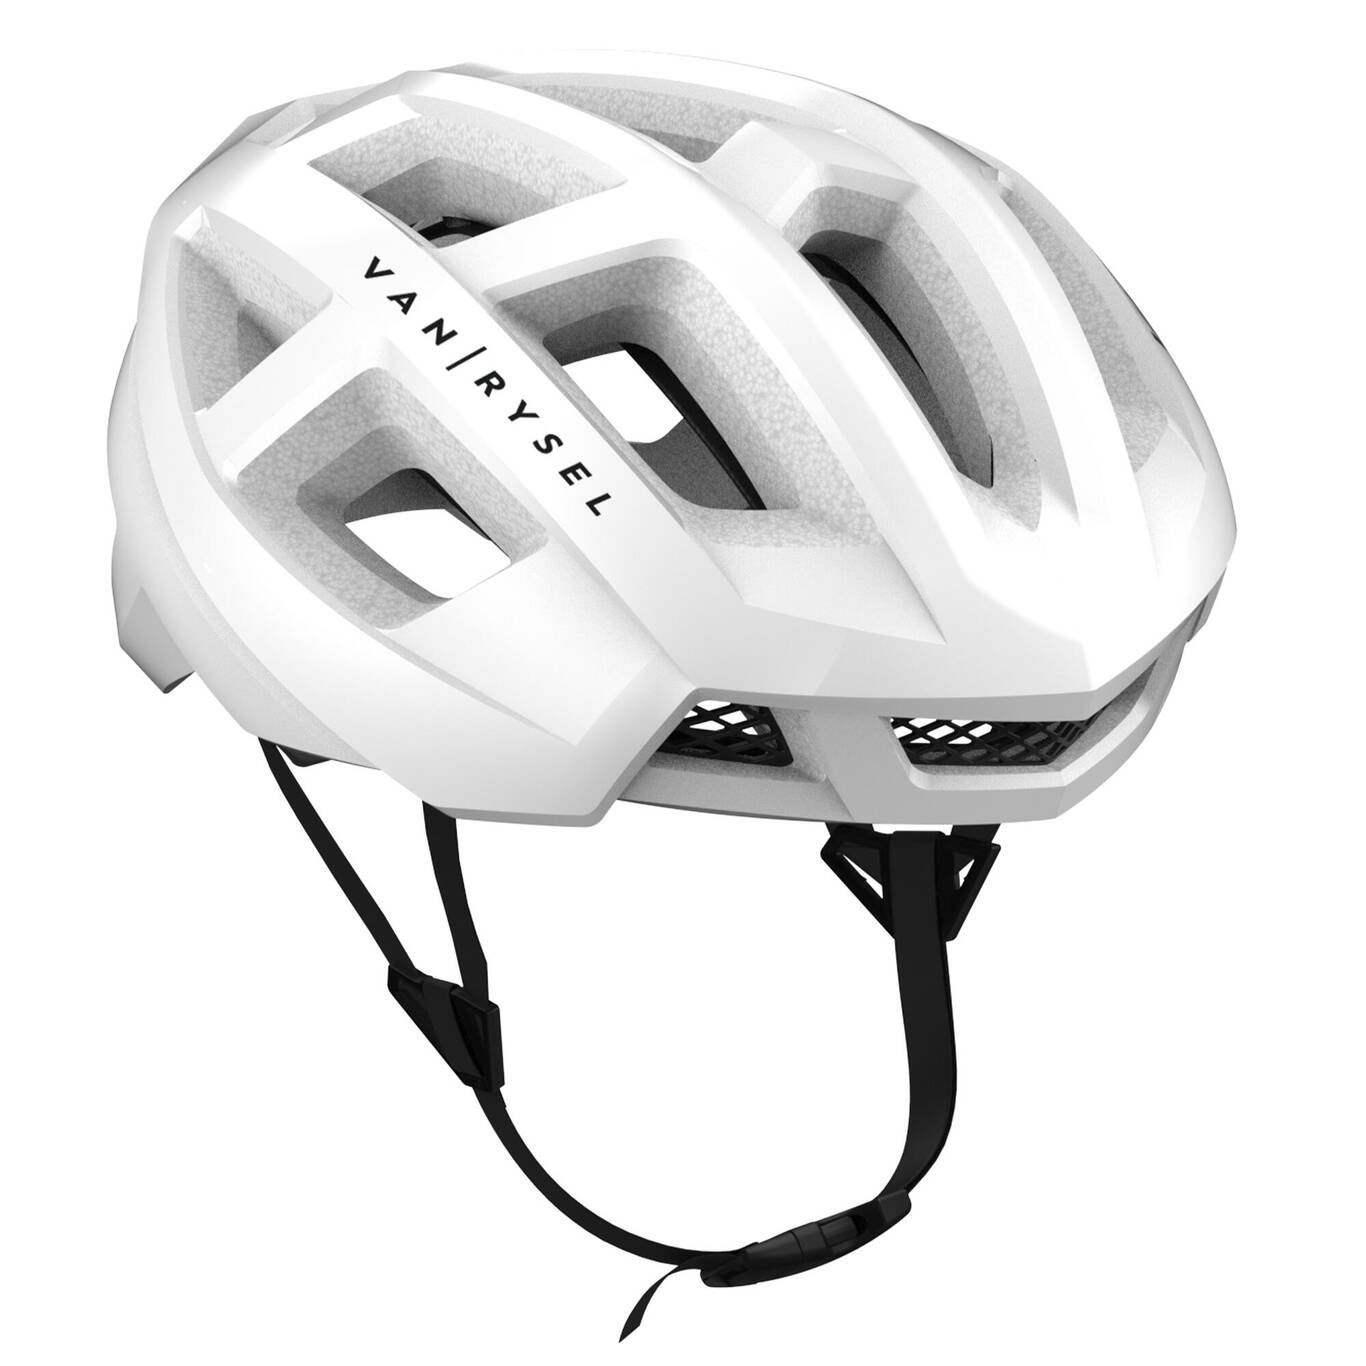 RoadR 900 Road Cycling Helmet - White